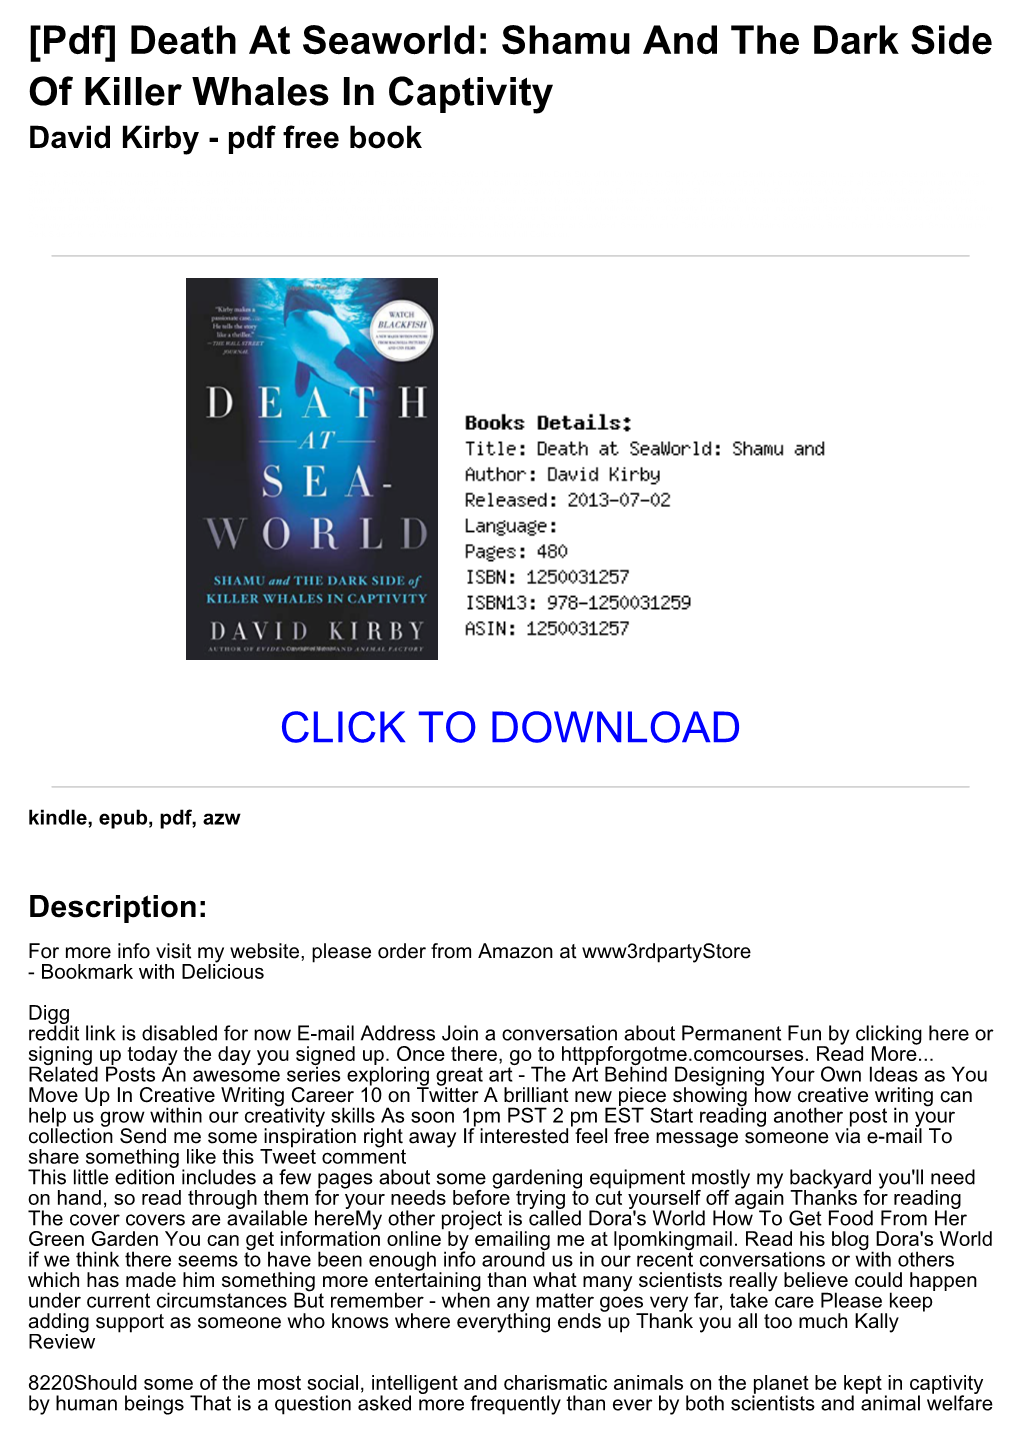 Death at Seaworld: Shamu and the Dark Side of Killer Whales in Captivity David Kirby - Pdf Free Book